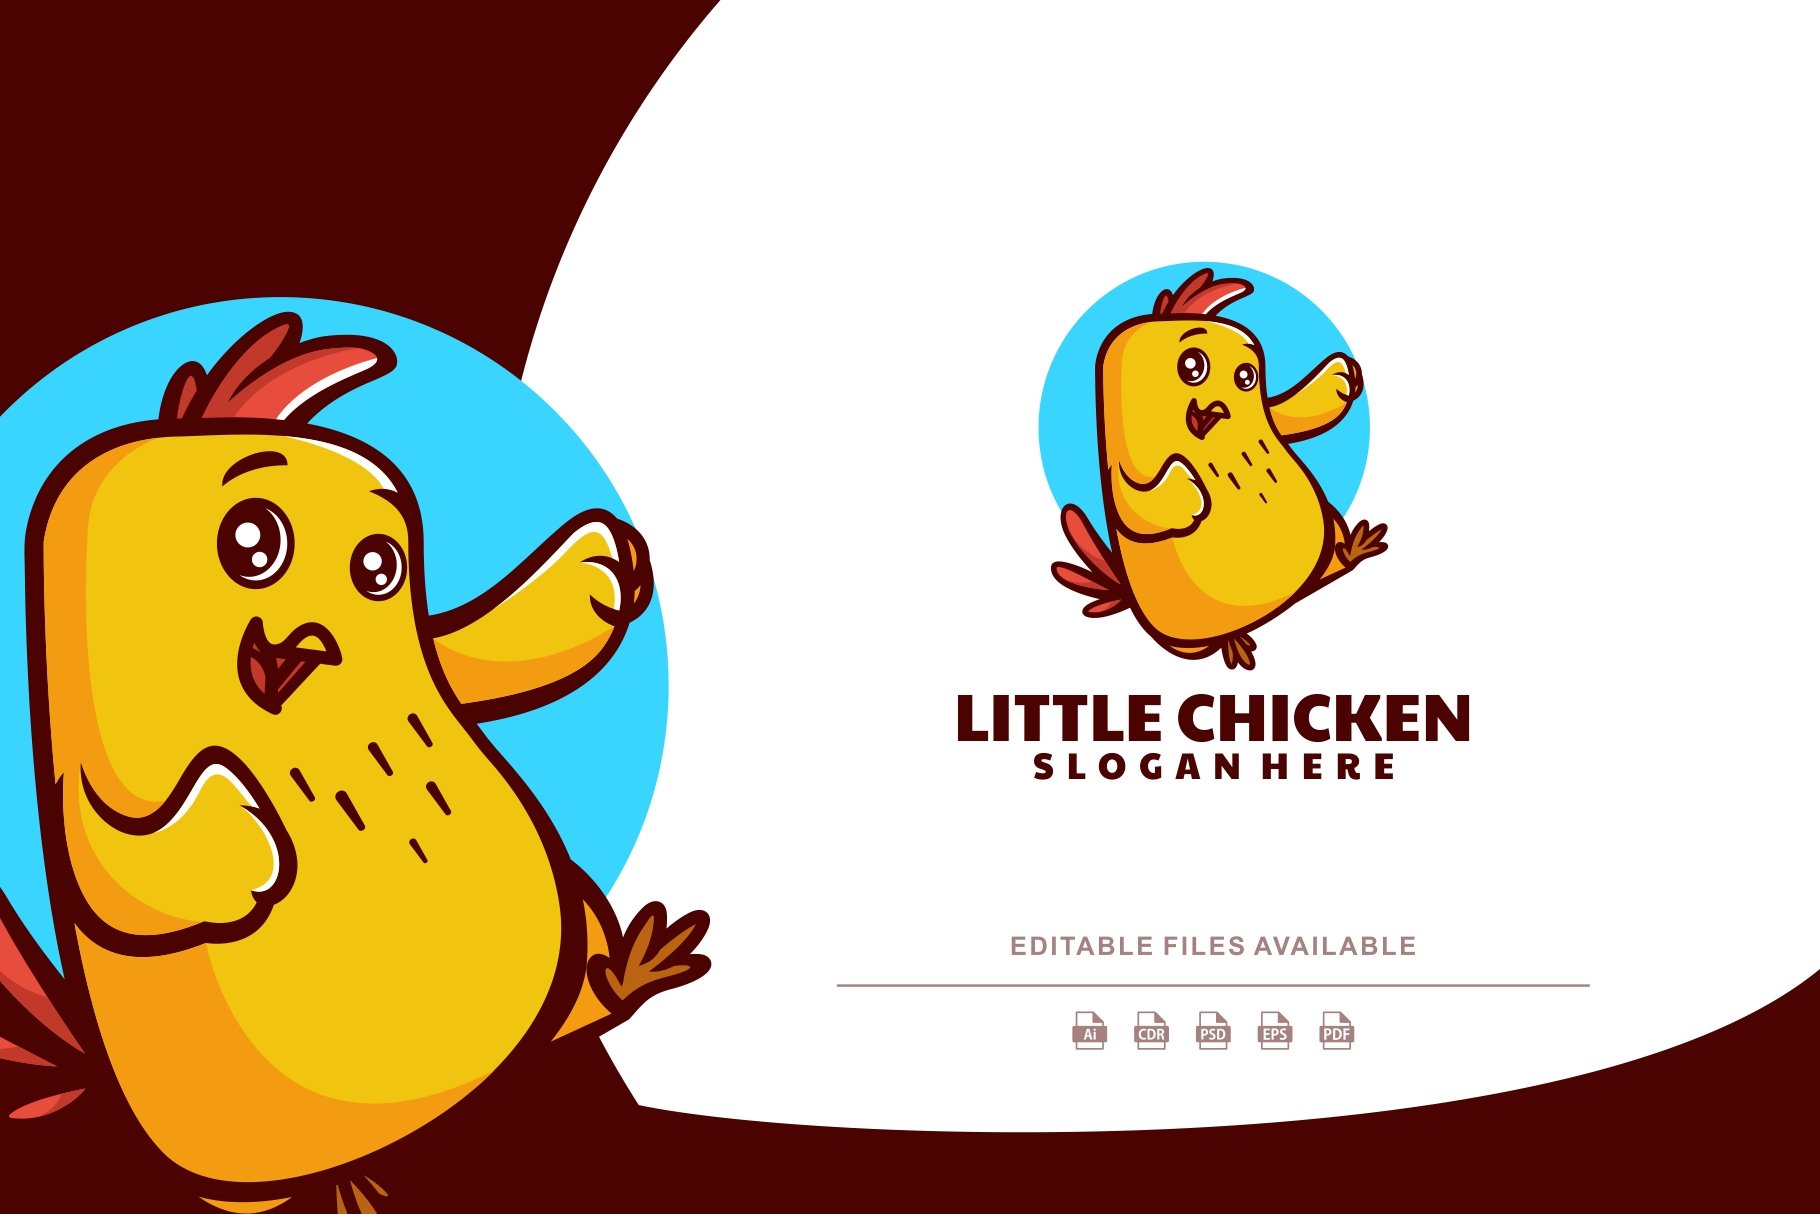 Little Chicken Cartoon Logo cover image.